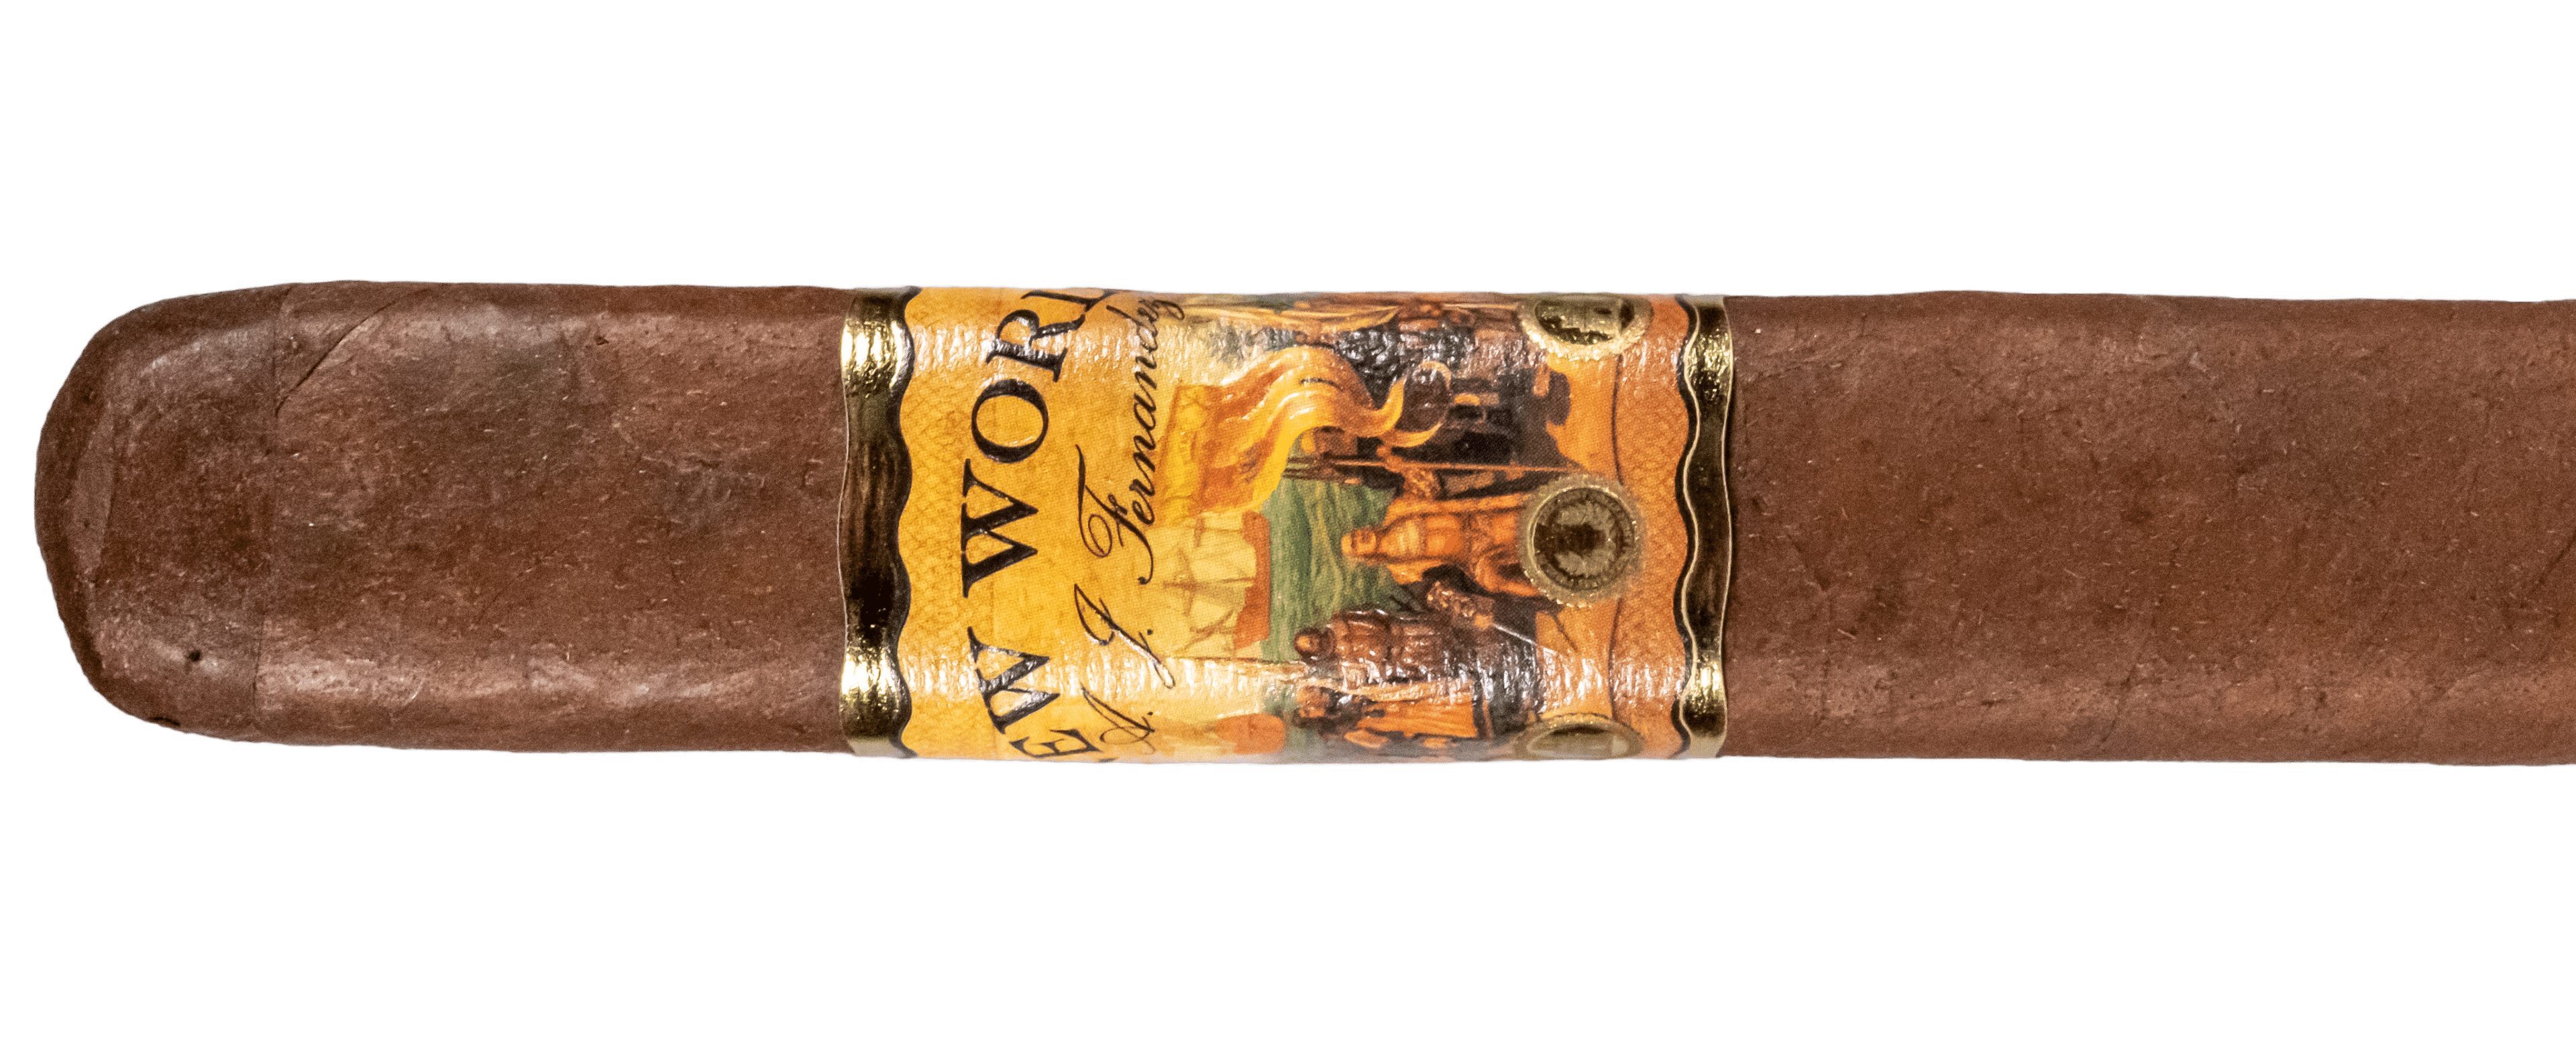 AJ Fernandez New World Dorado Toro - Blind Cigar Review